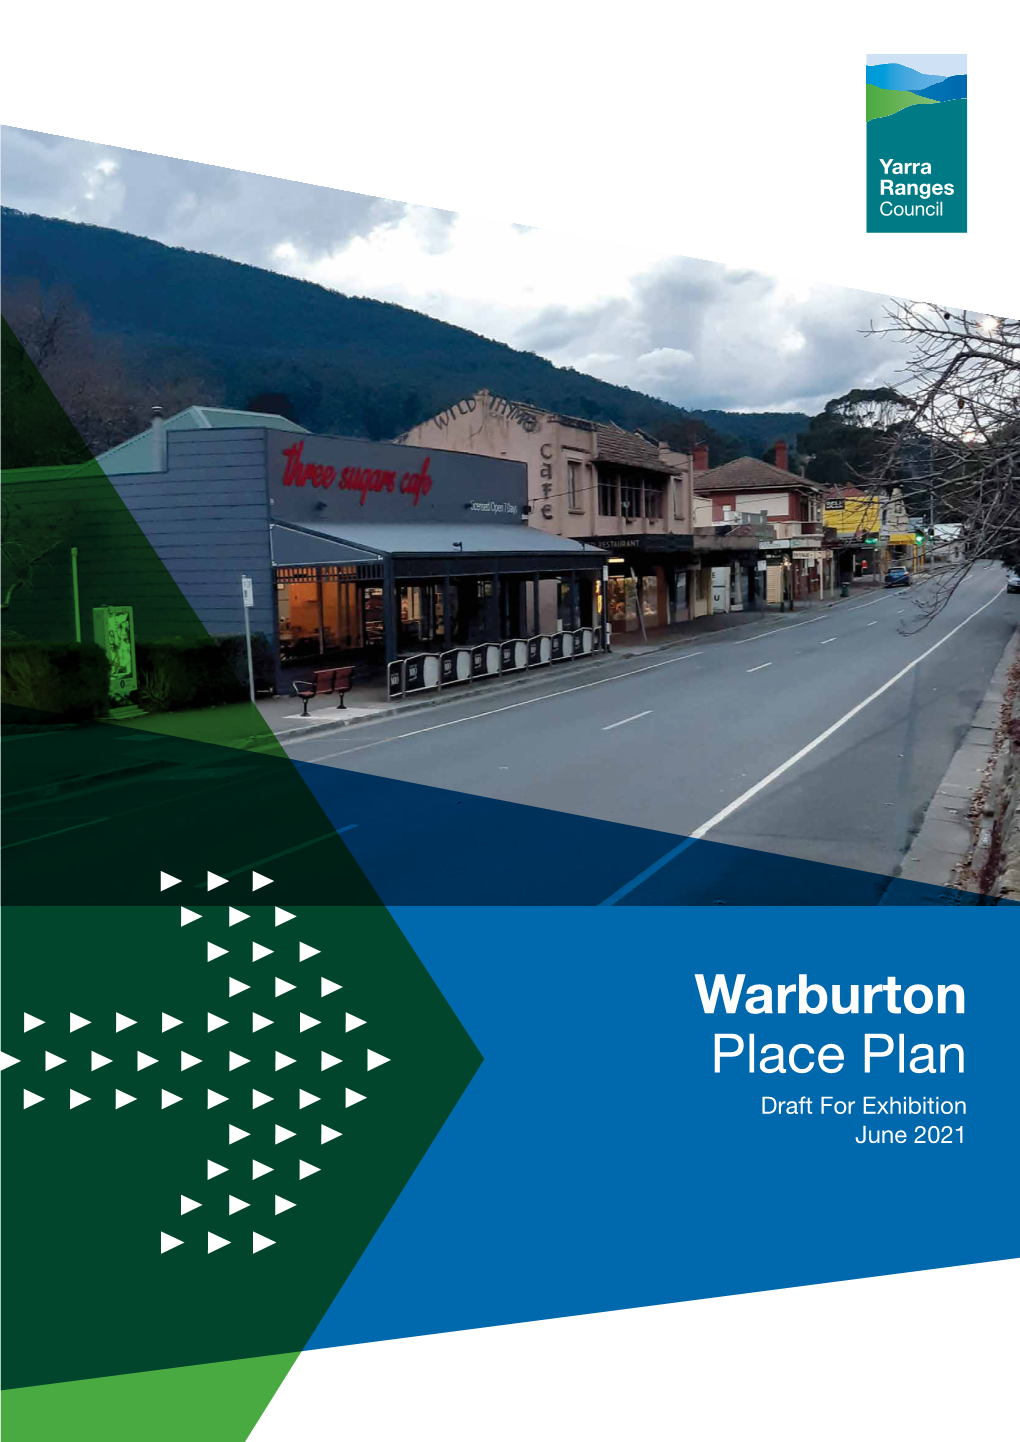 Warburton Place Plan – Draft for Exhibition 2021